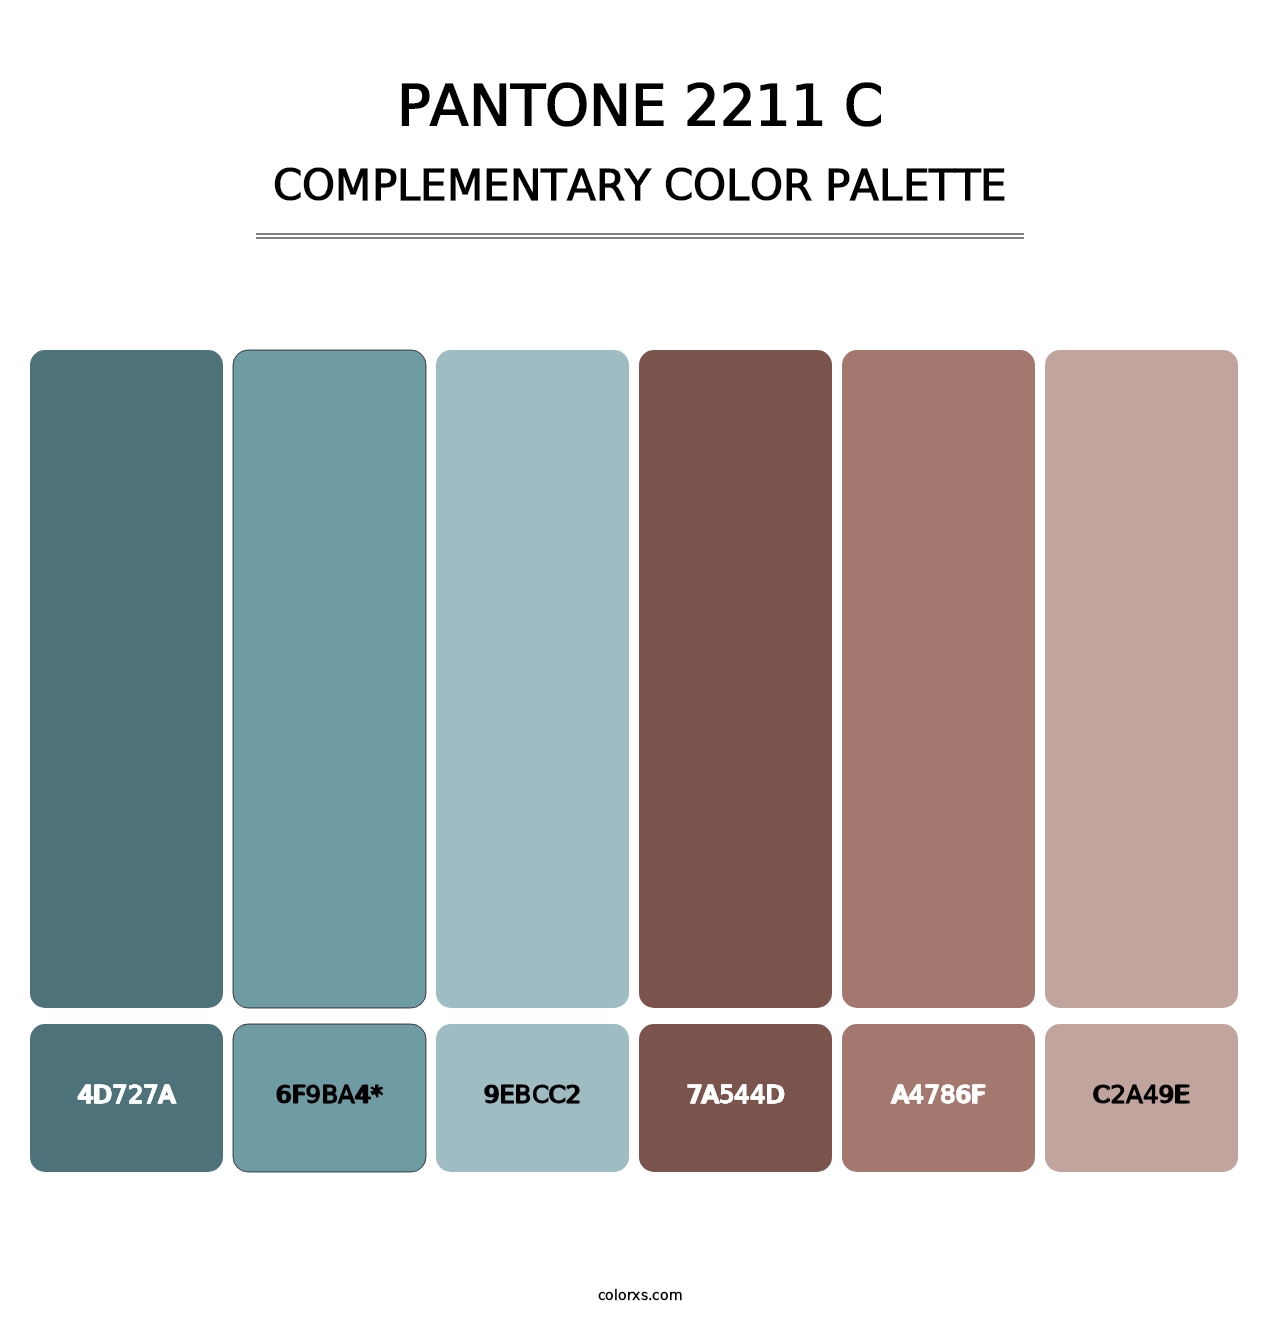 PANTONE 2211 C - Complementary Color Palette